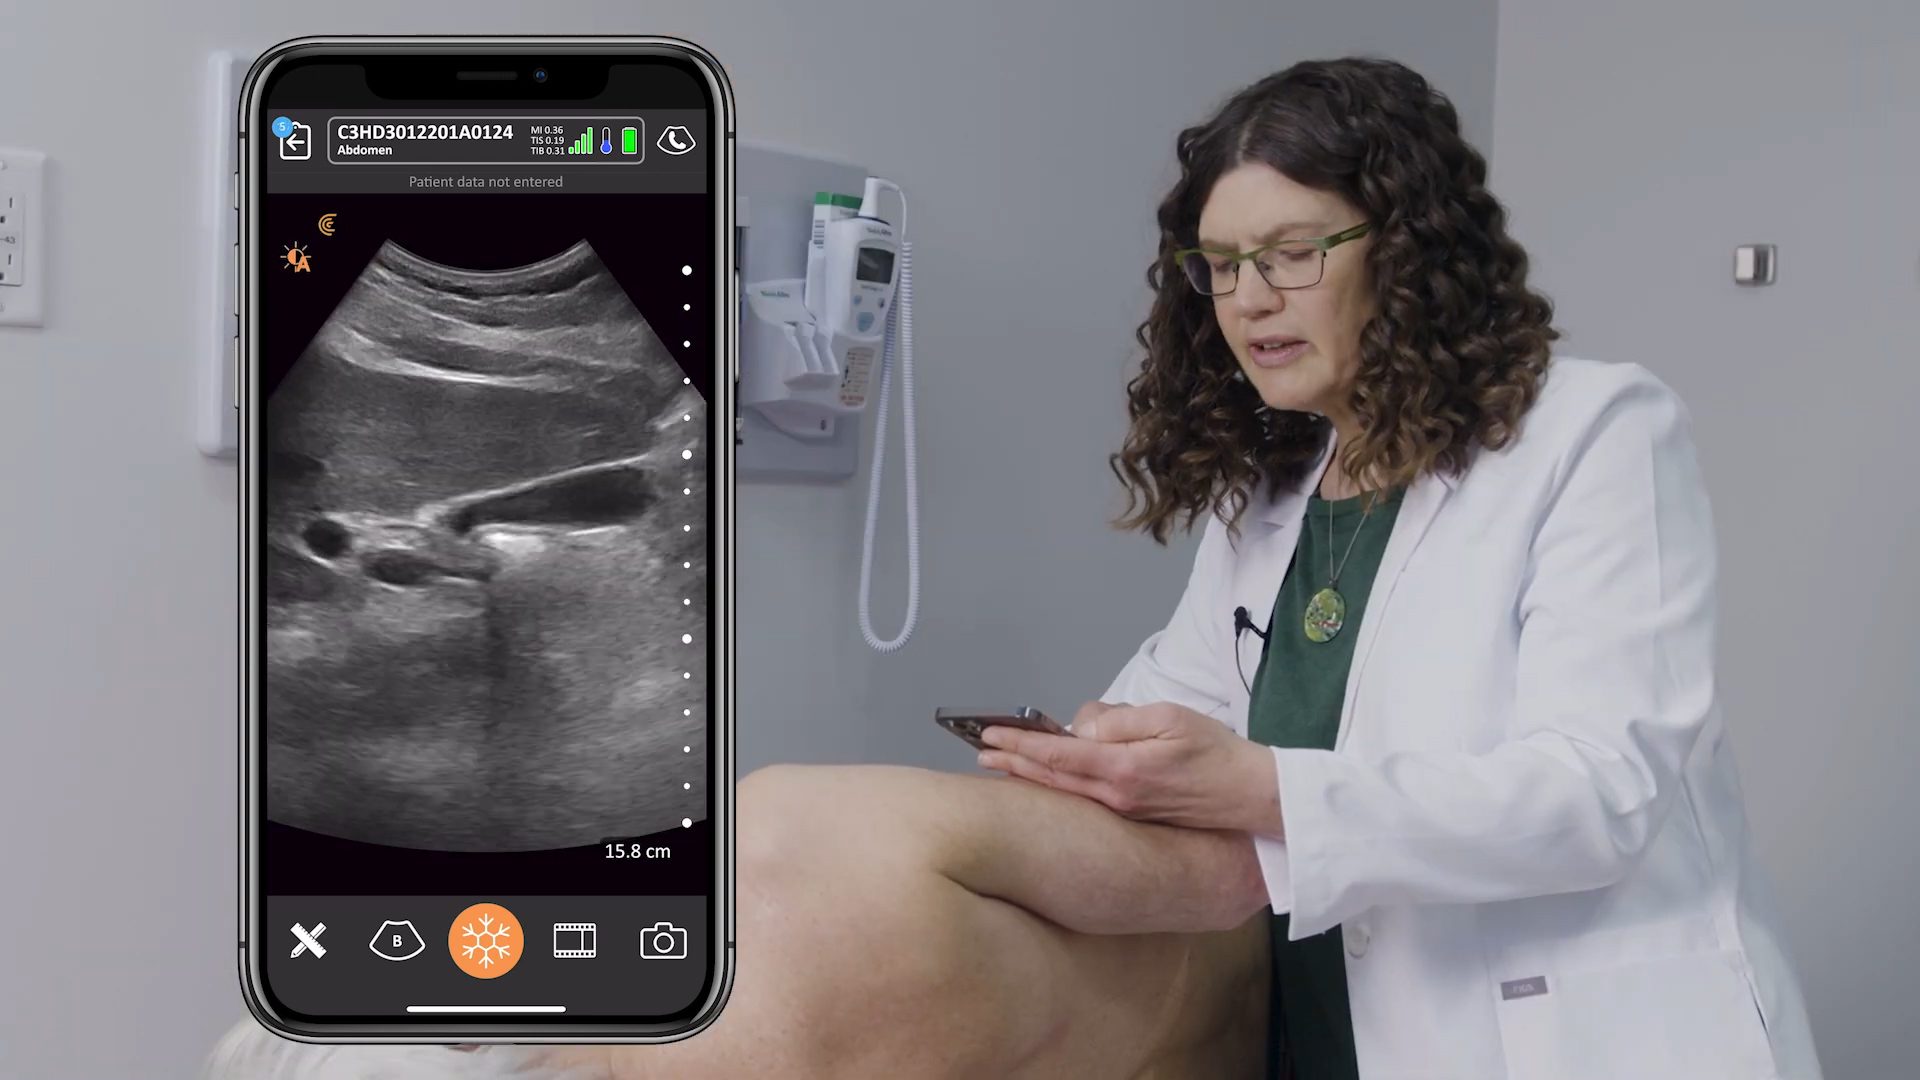 VIDEO] Handheld Ultrasound Has Helped Me Save Lives, Says Rural